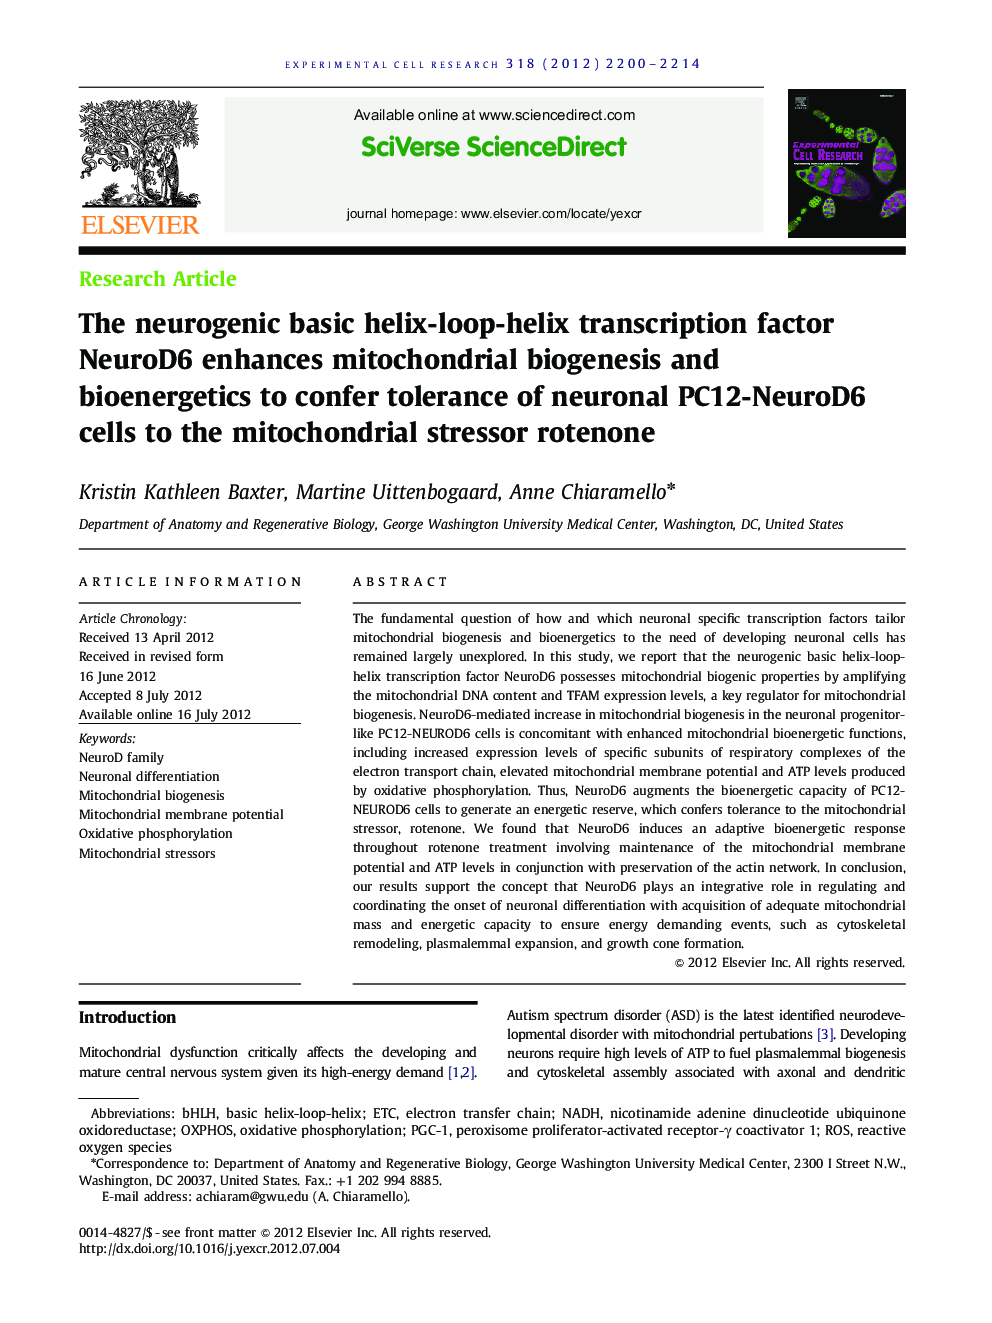 The neurogenic basic helix-loop-helix transcription factor NeuroD6 enhances mitochondrial biogenesis and bioenergetics to confer tolerance of neuronal PC12-NeuroD6 cells to the mitochondrial stressor rotenone